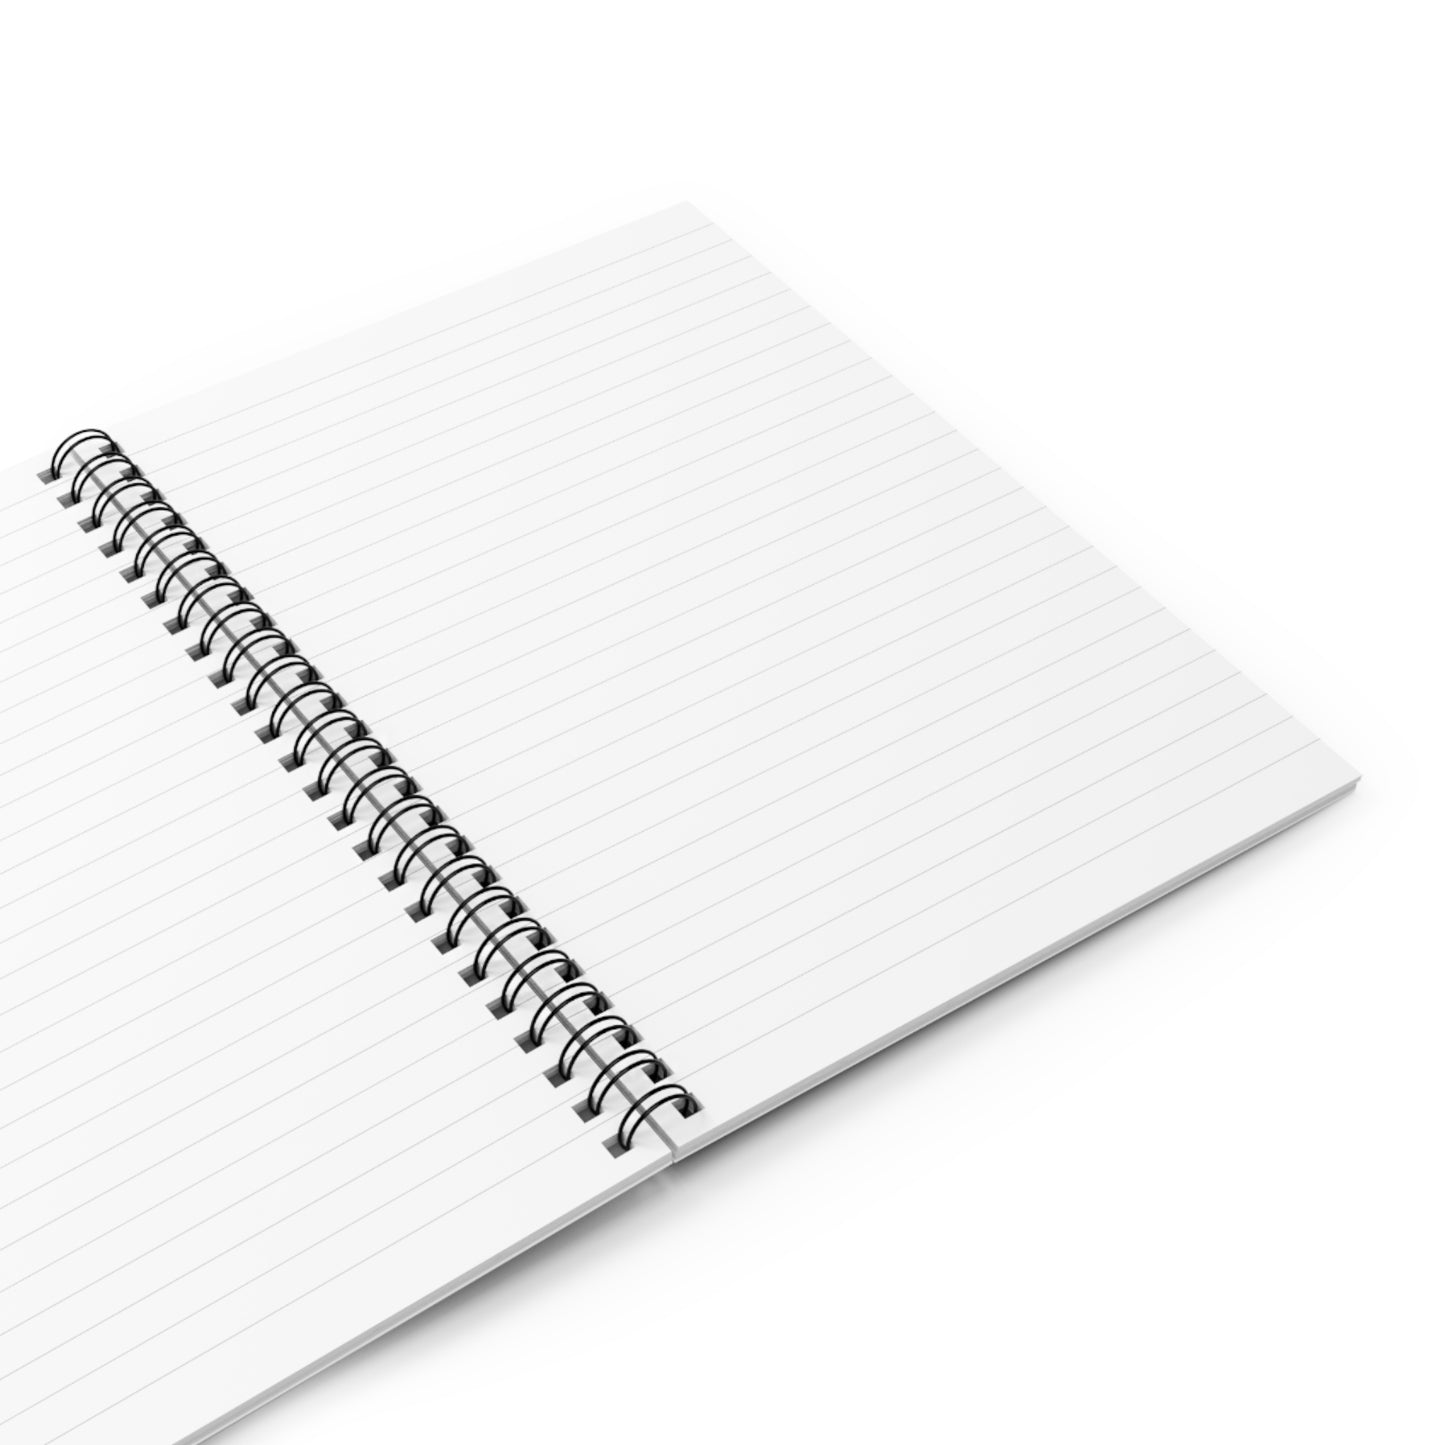 Ruled Spiral Notebook